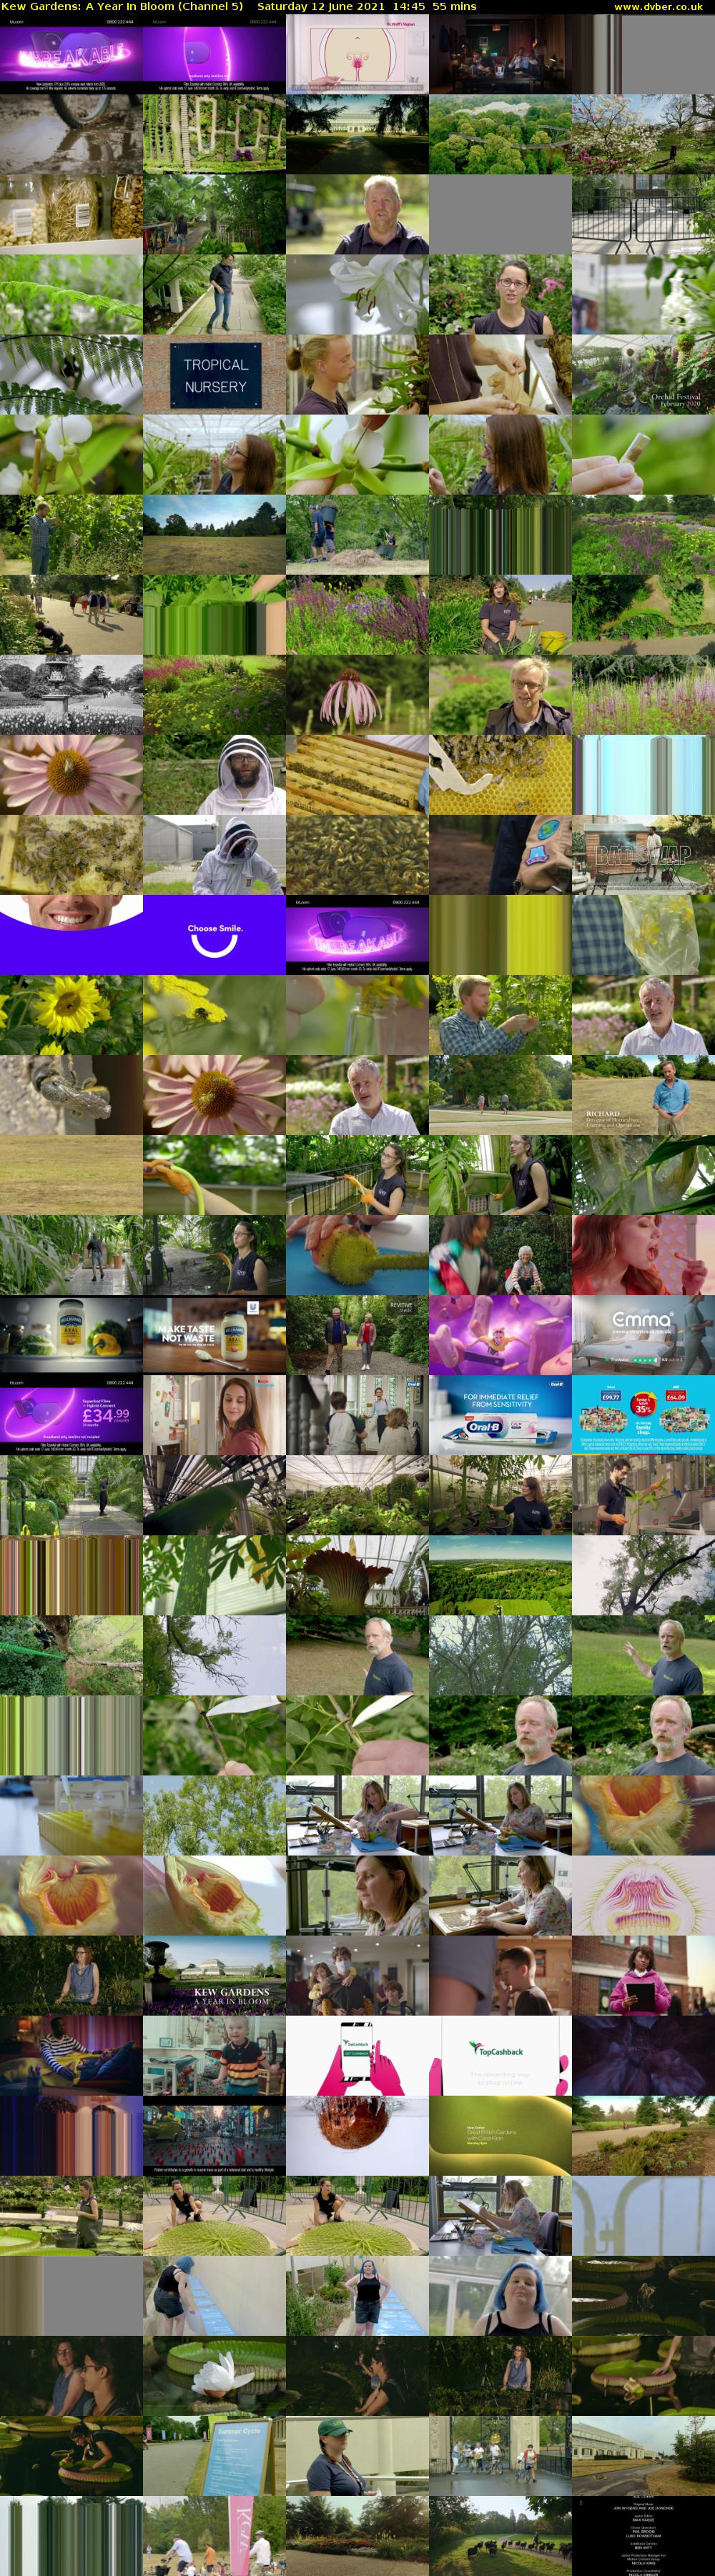 Kew Gardens: A Year In Bloom (Channel 5) Saturday 12 June 2021 14:45 - 15:40